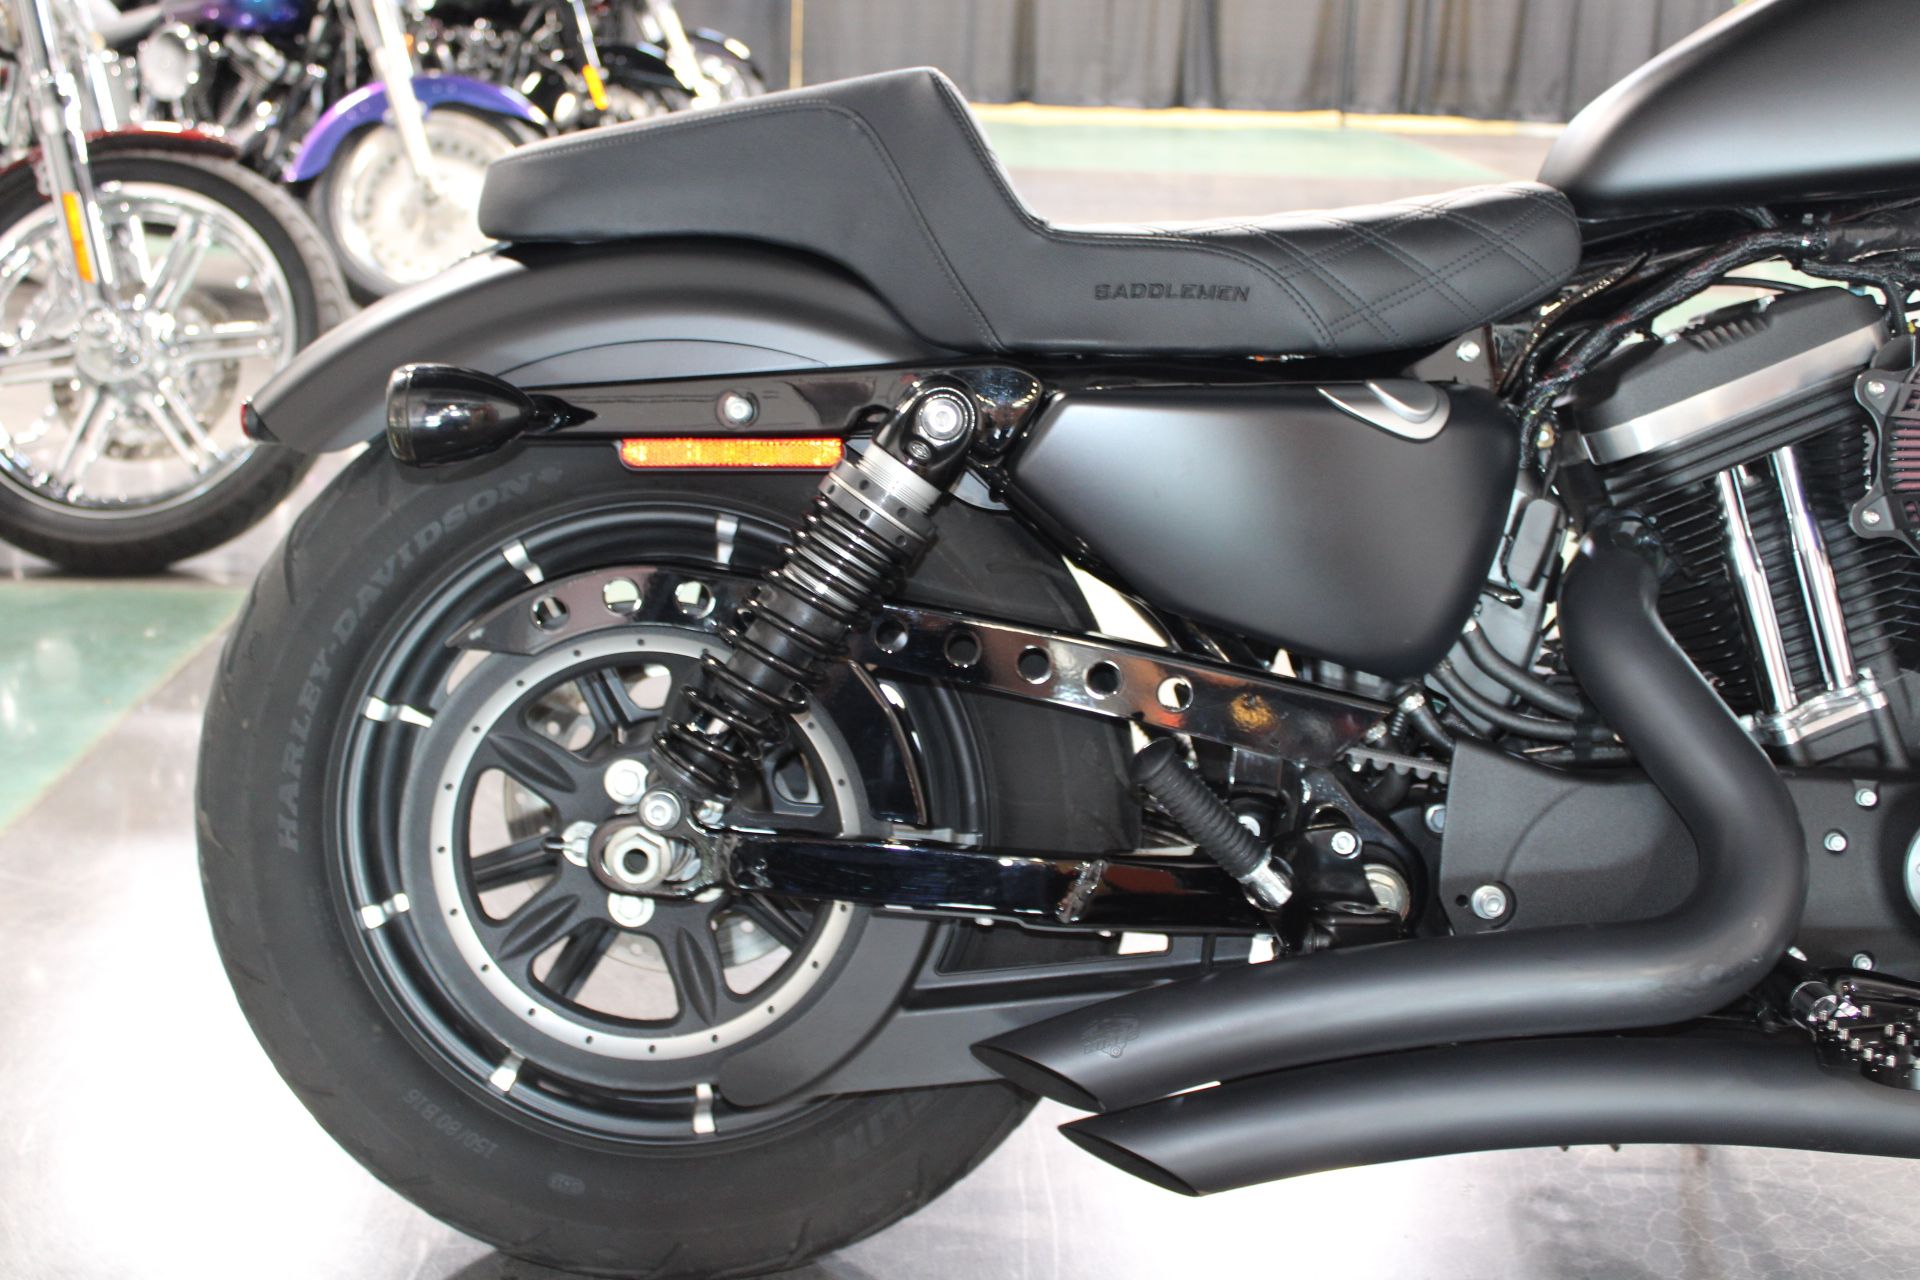 2019 Harley-Davidson Iron 883™ in Shorewood, Illinois - Photo 11